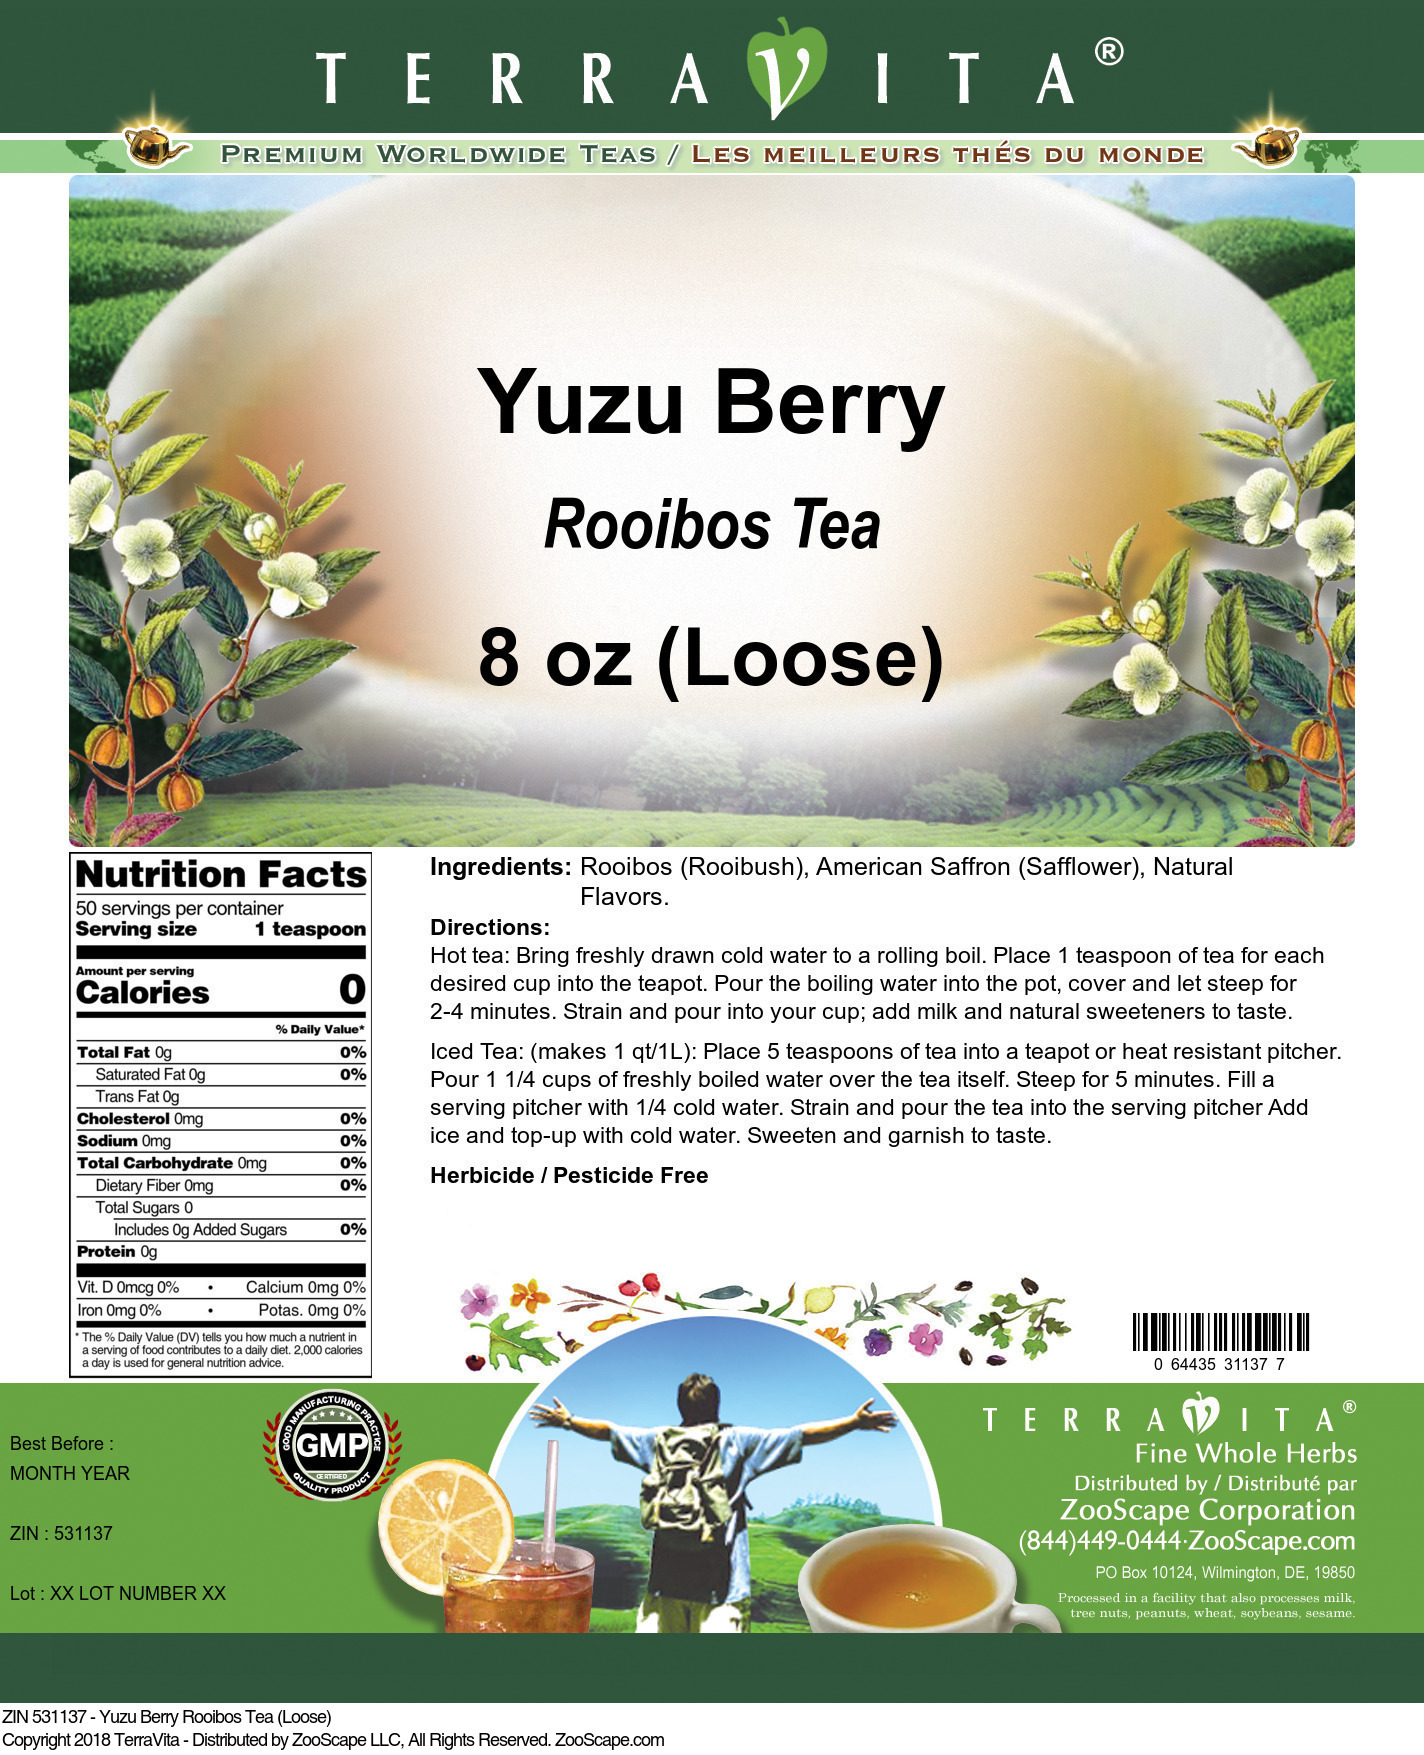 Yuzu Berry Rooibos Tea (Loose) - Label